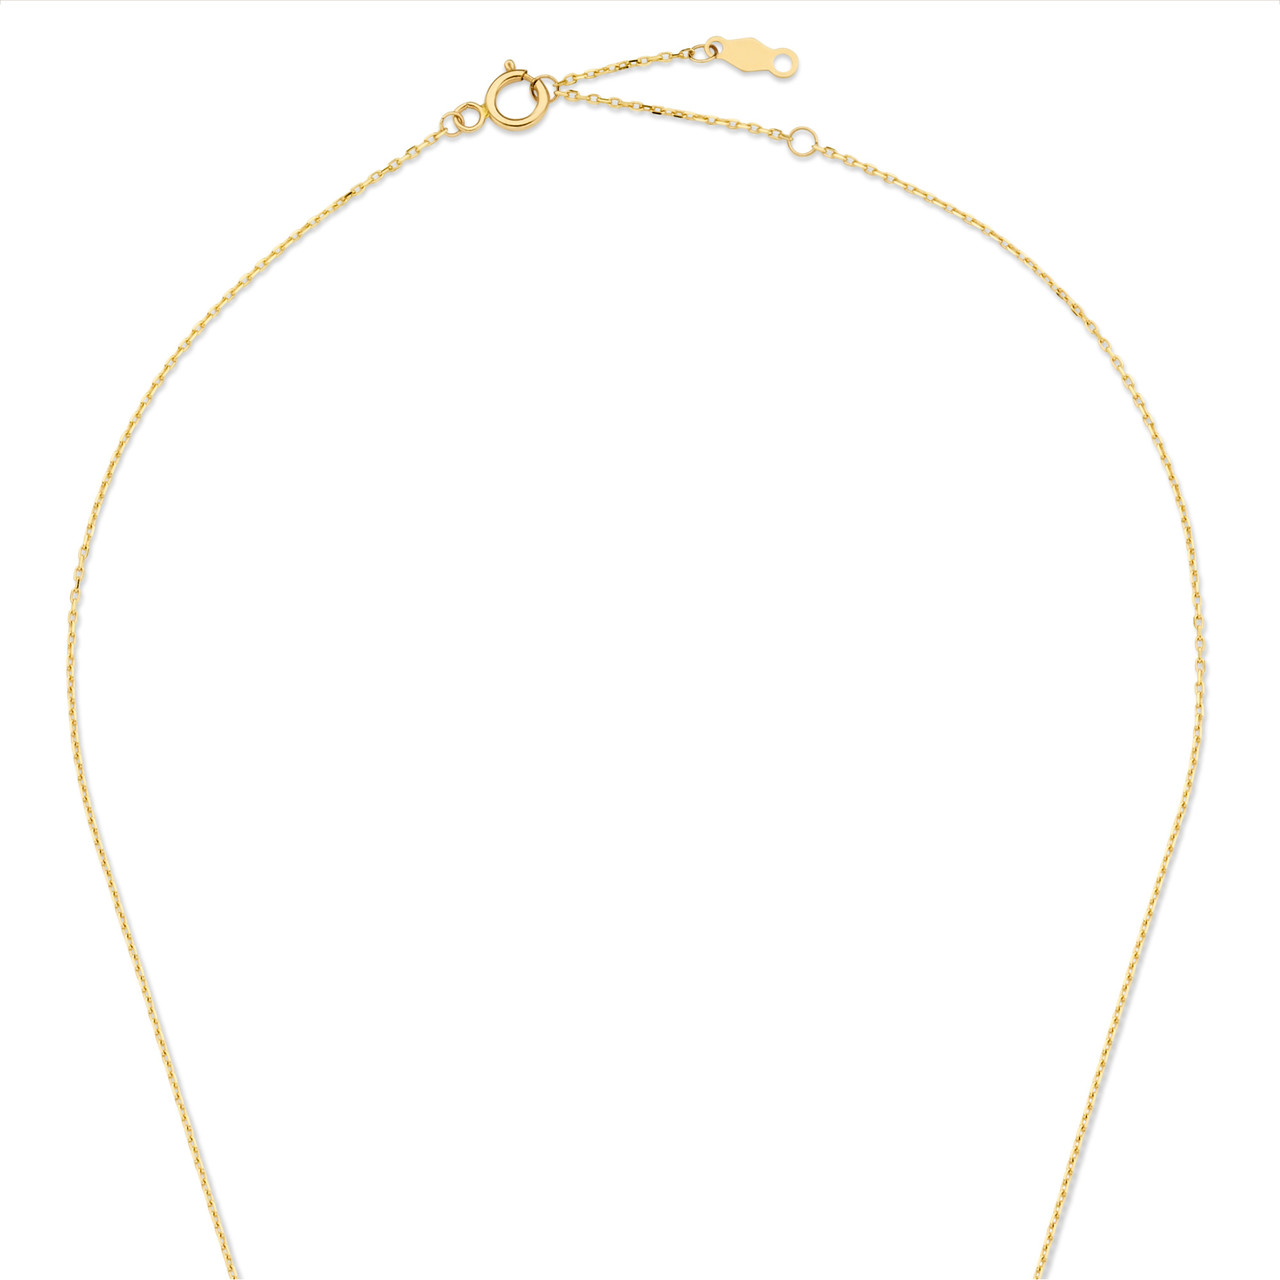 Isabel 14 Bernard IB340138 - gold necklace karat